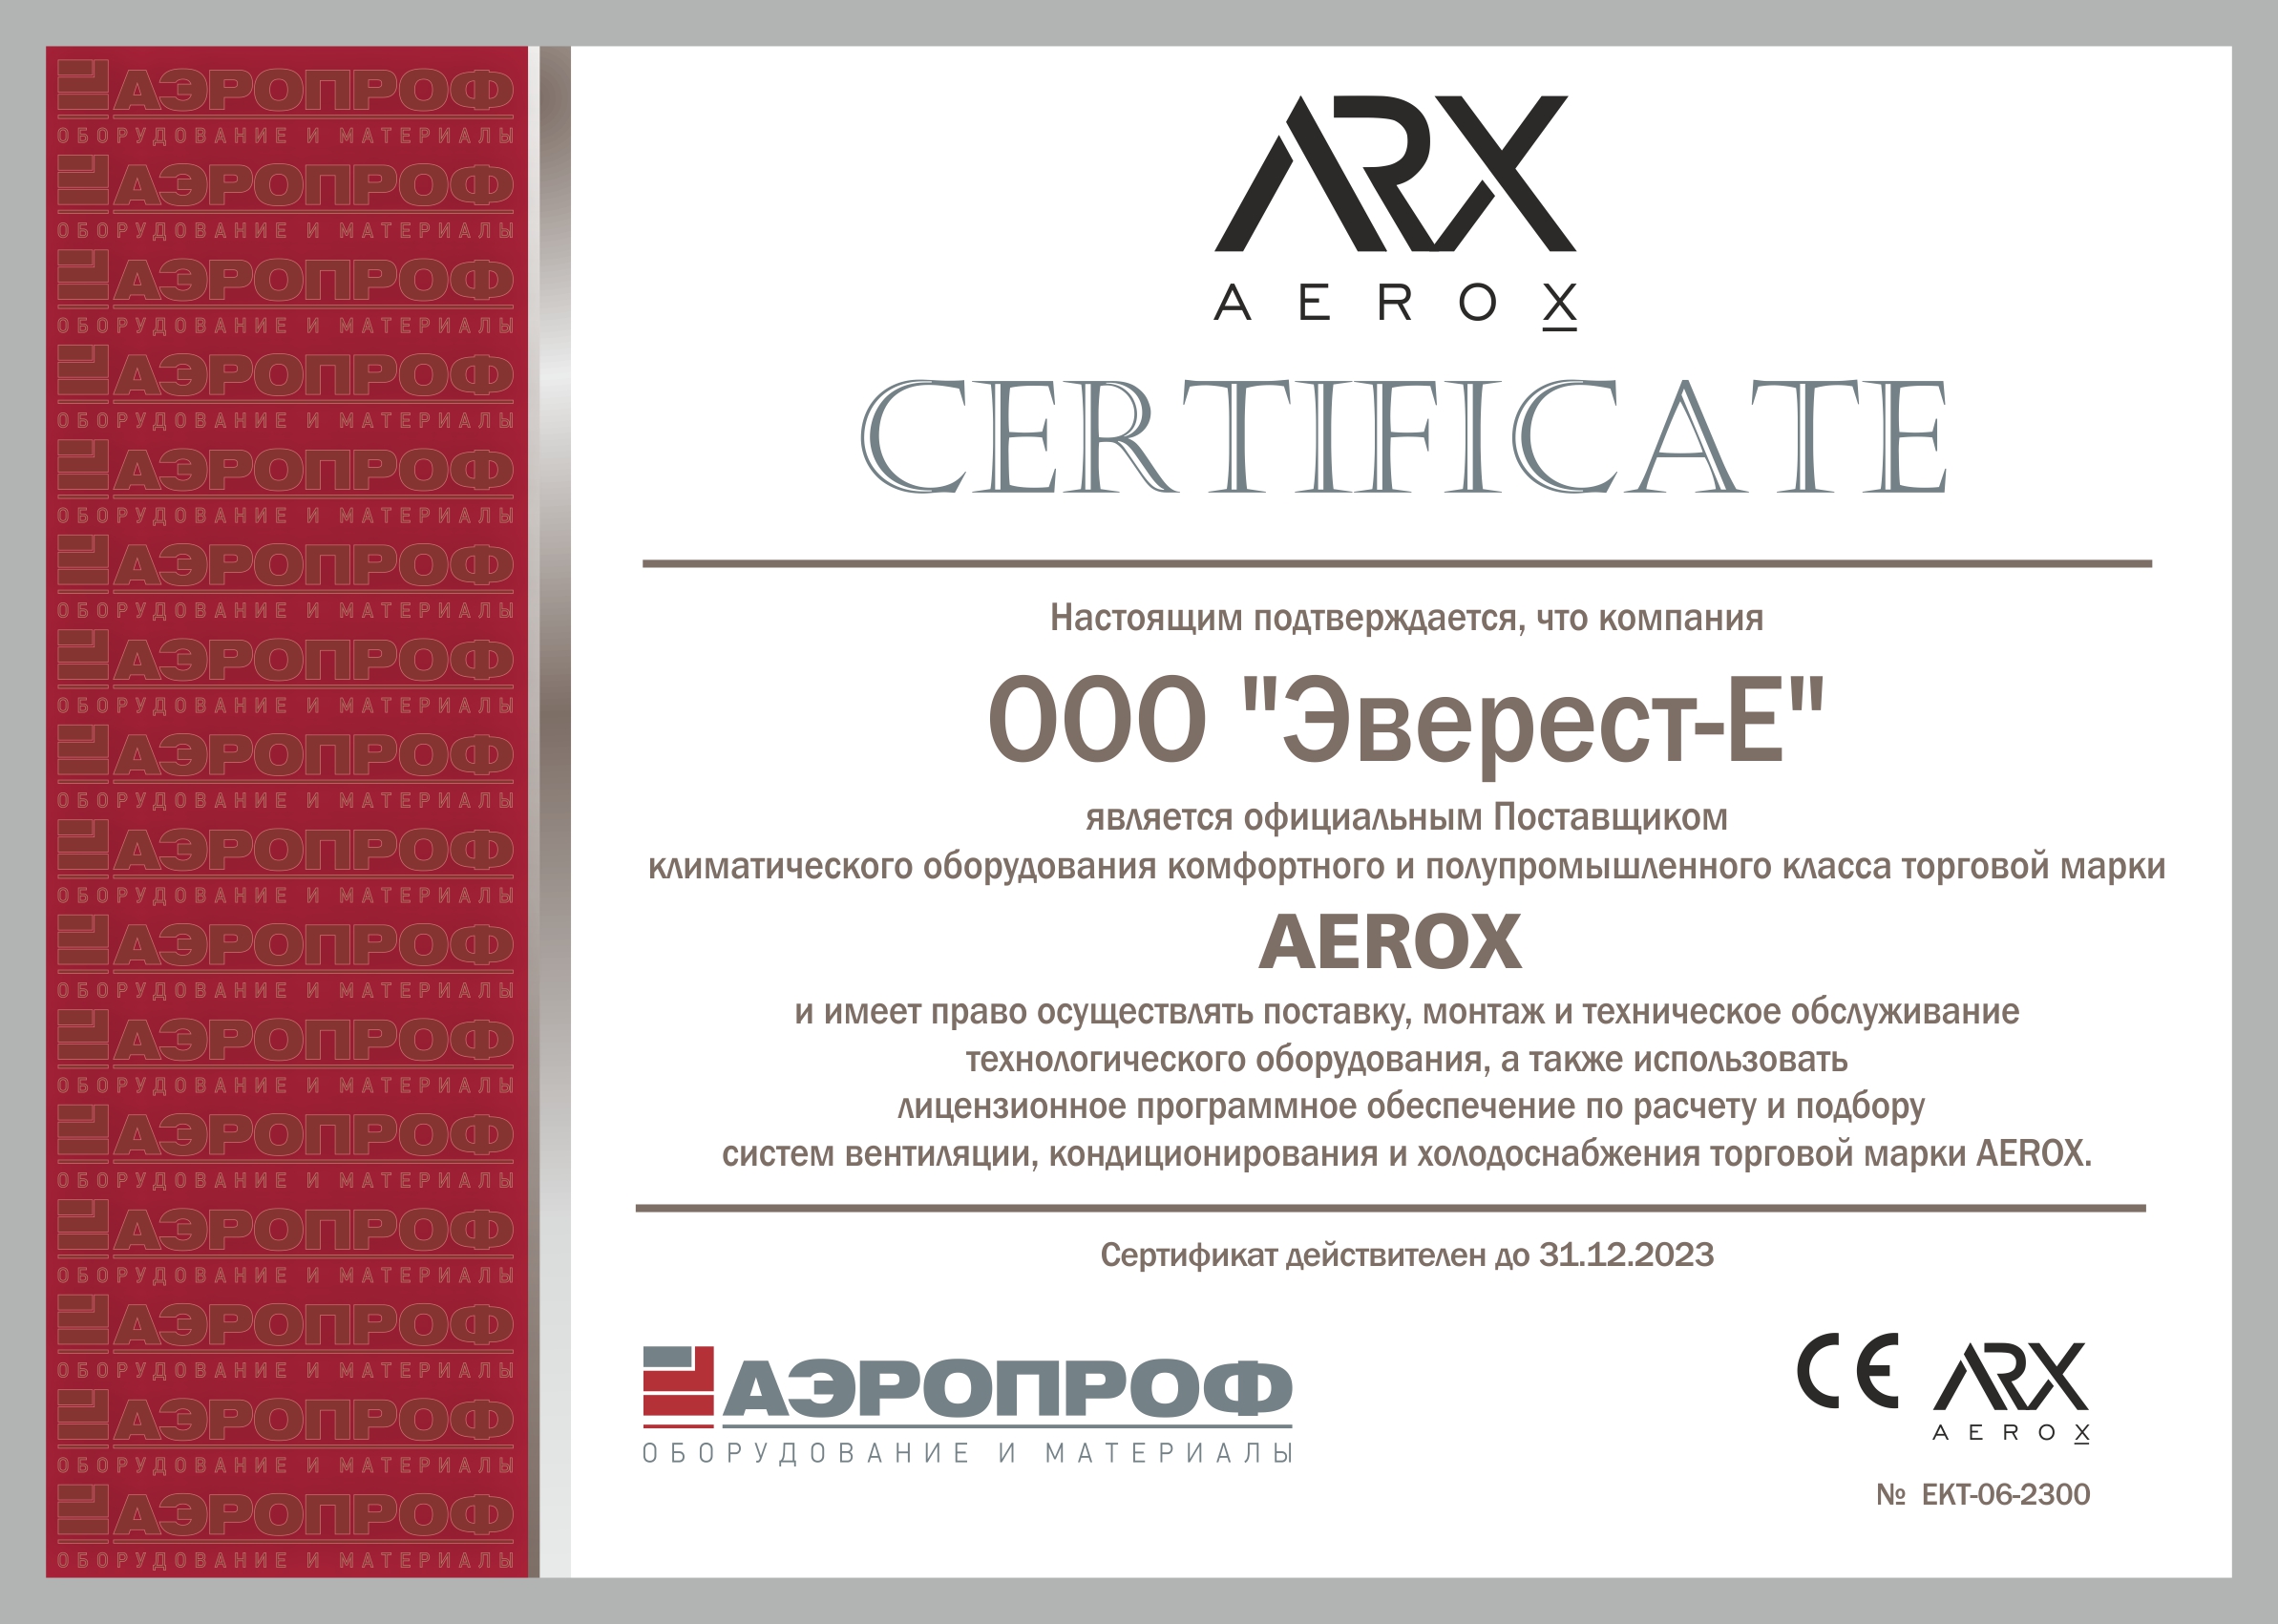 sert23-everest-arx Kondicioner Aero ALRS-07IH3A-02/ALRS-07OH3A-02 kypit v Ekaterinbyrge v internet-magazine KlimatMarket96.ry Сертификат официального дилера